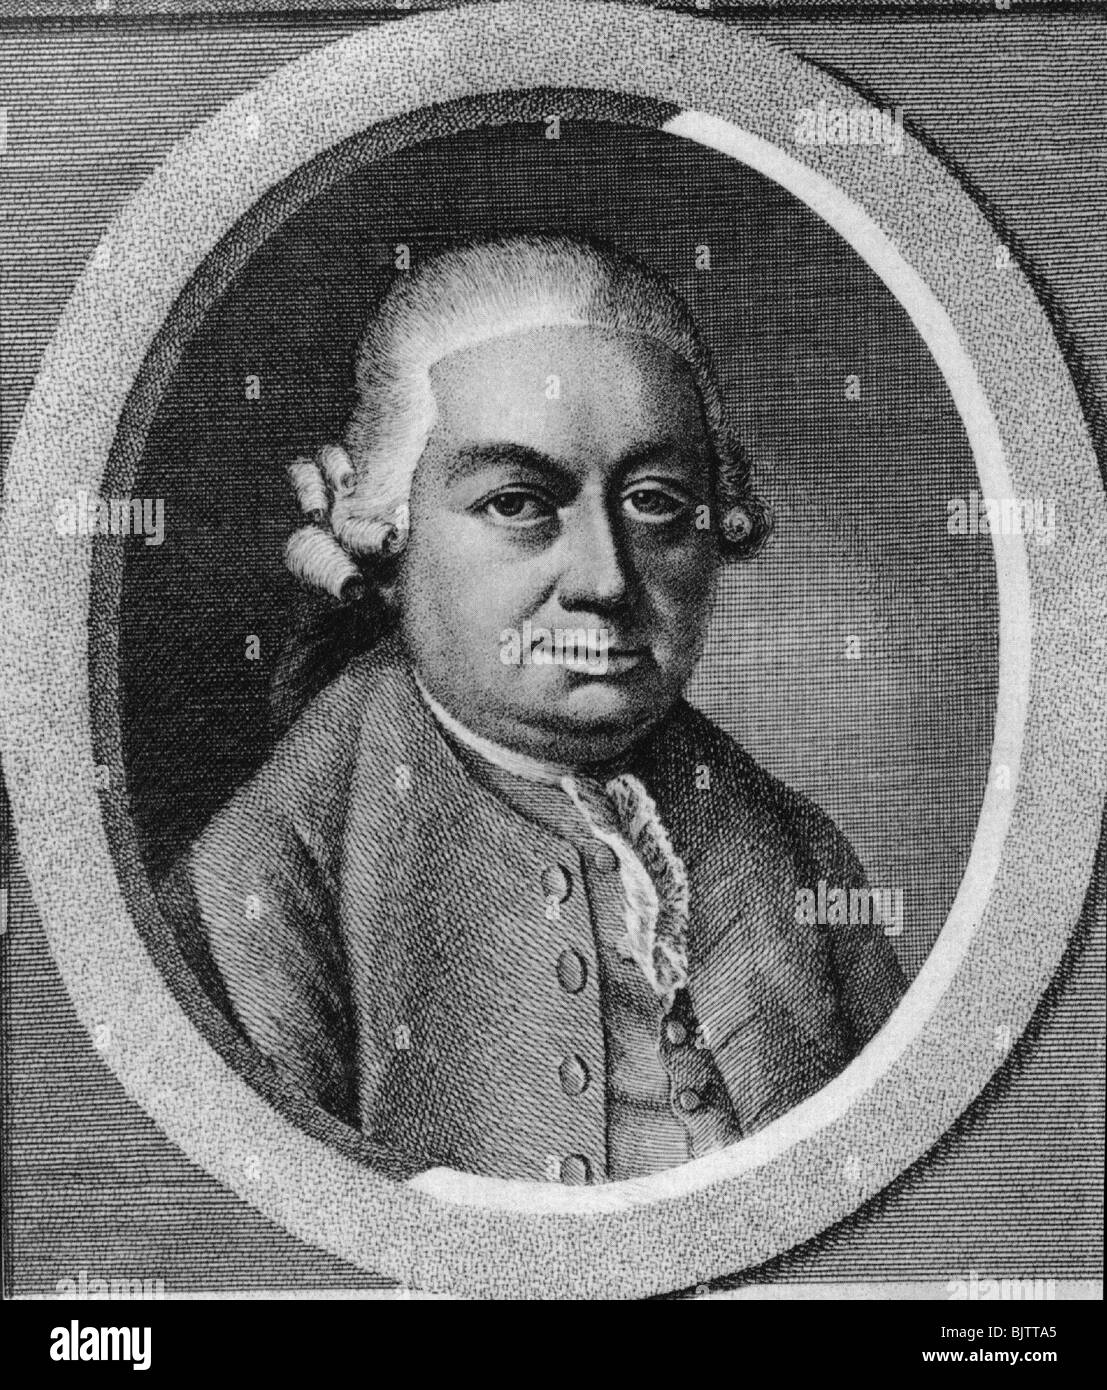 Bach, Carl Philipp Emanuel, 8.3.1714 - 14.12.1788, German composer, son of Johann Sebastian Bach, portrait, engraving, , Stock Photo